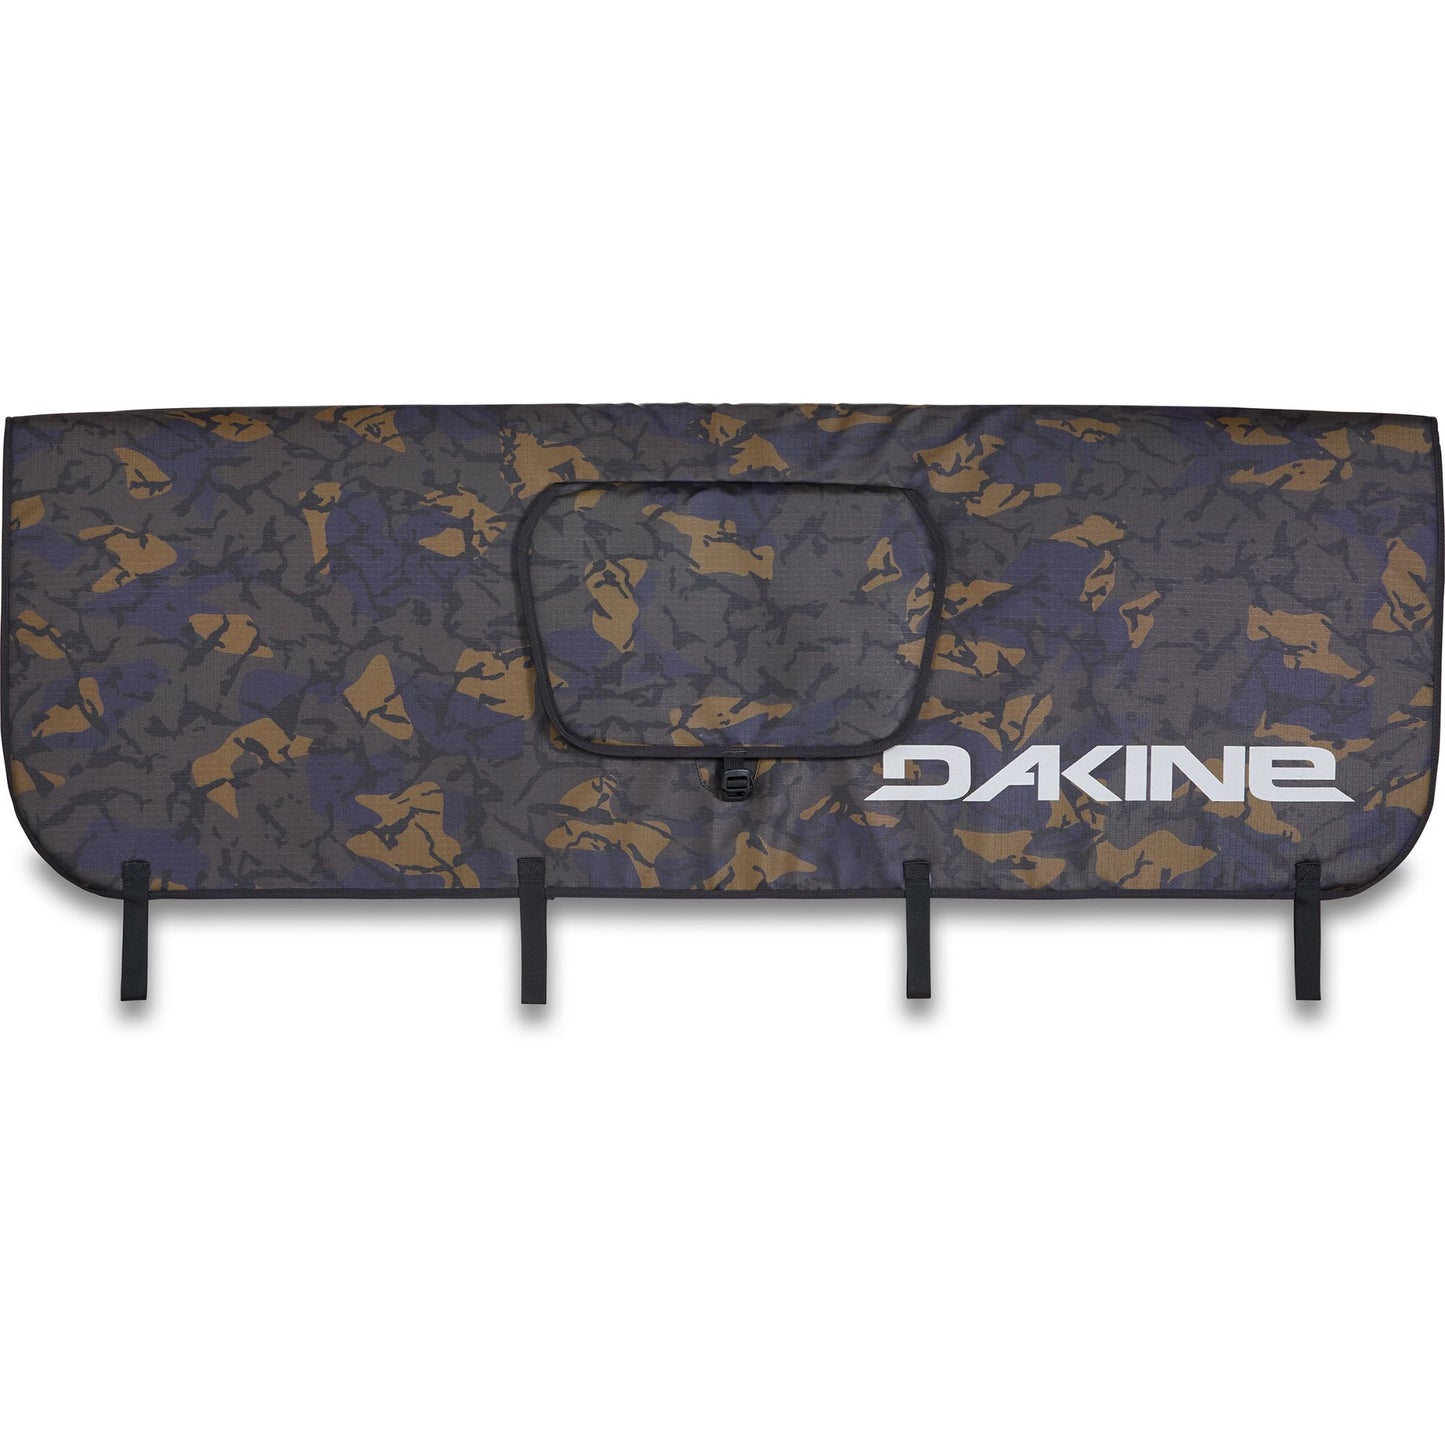 Dakine Pickup Pad DLX Curve Cascade Camo Tailgate Pads